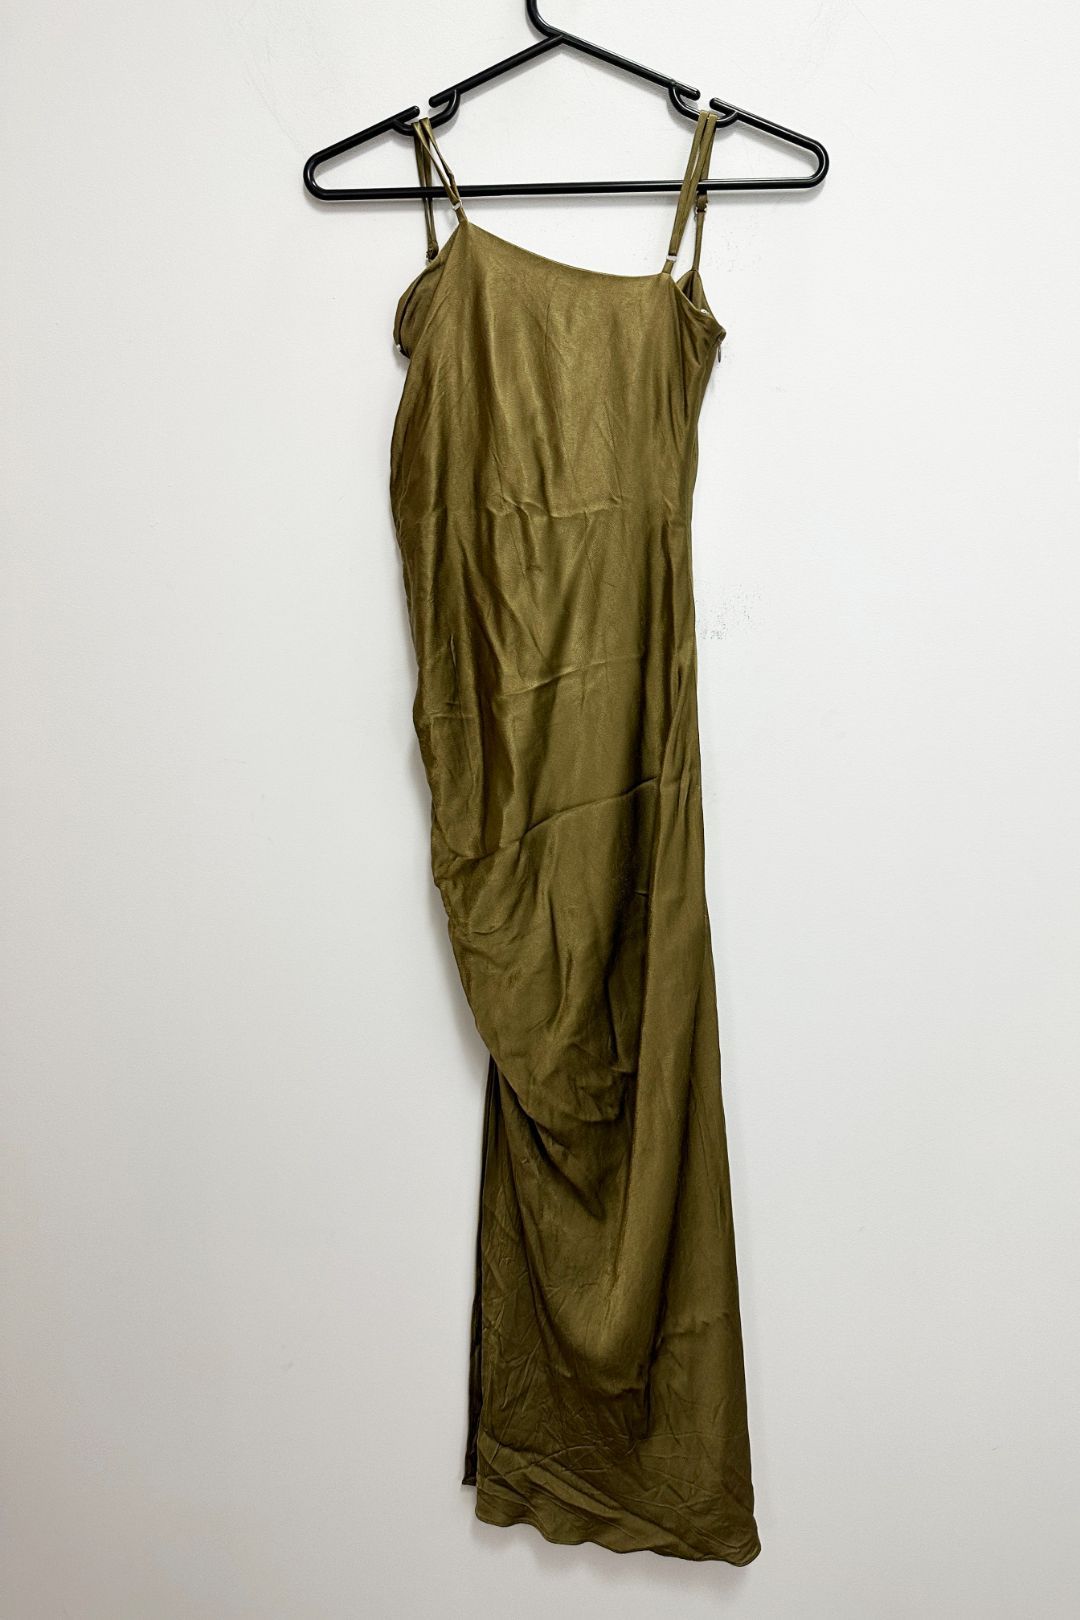 Shona Joy Bias Ruched Midi Dress in Cumin Green